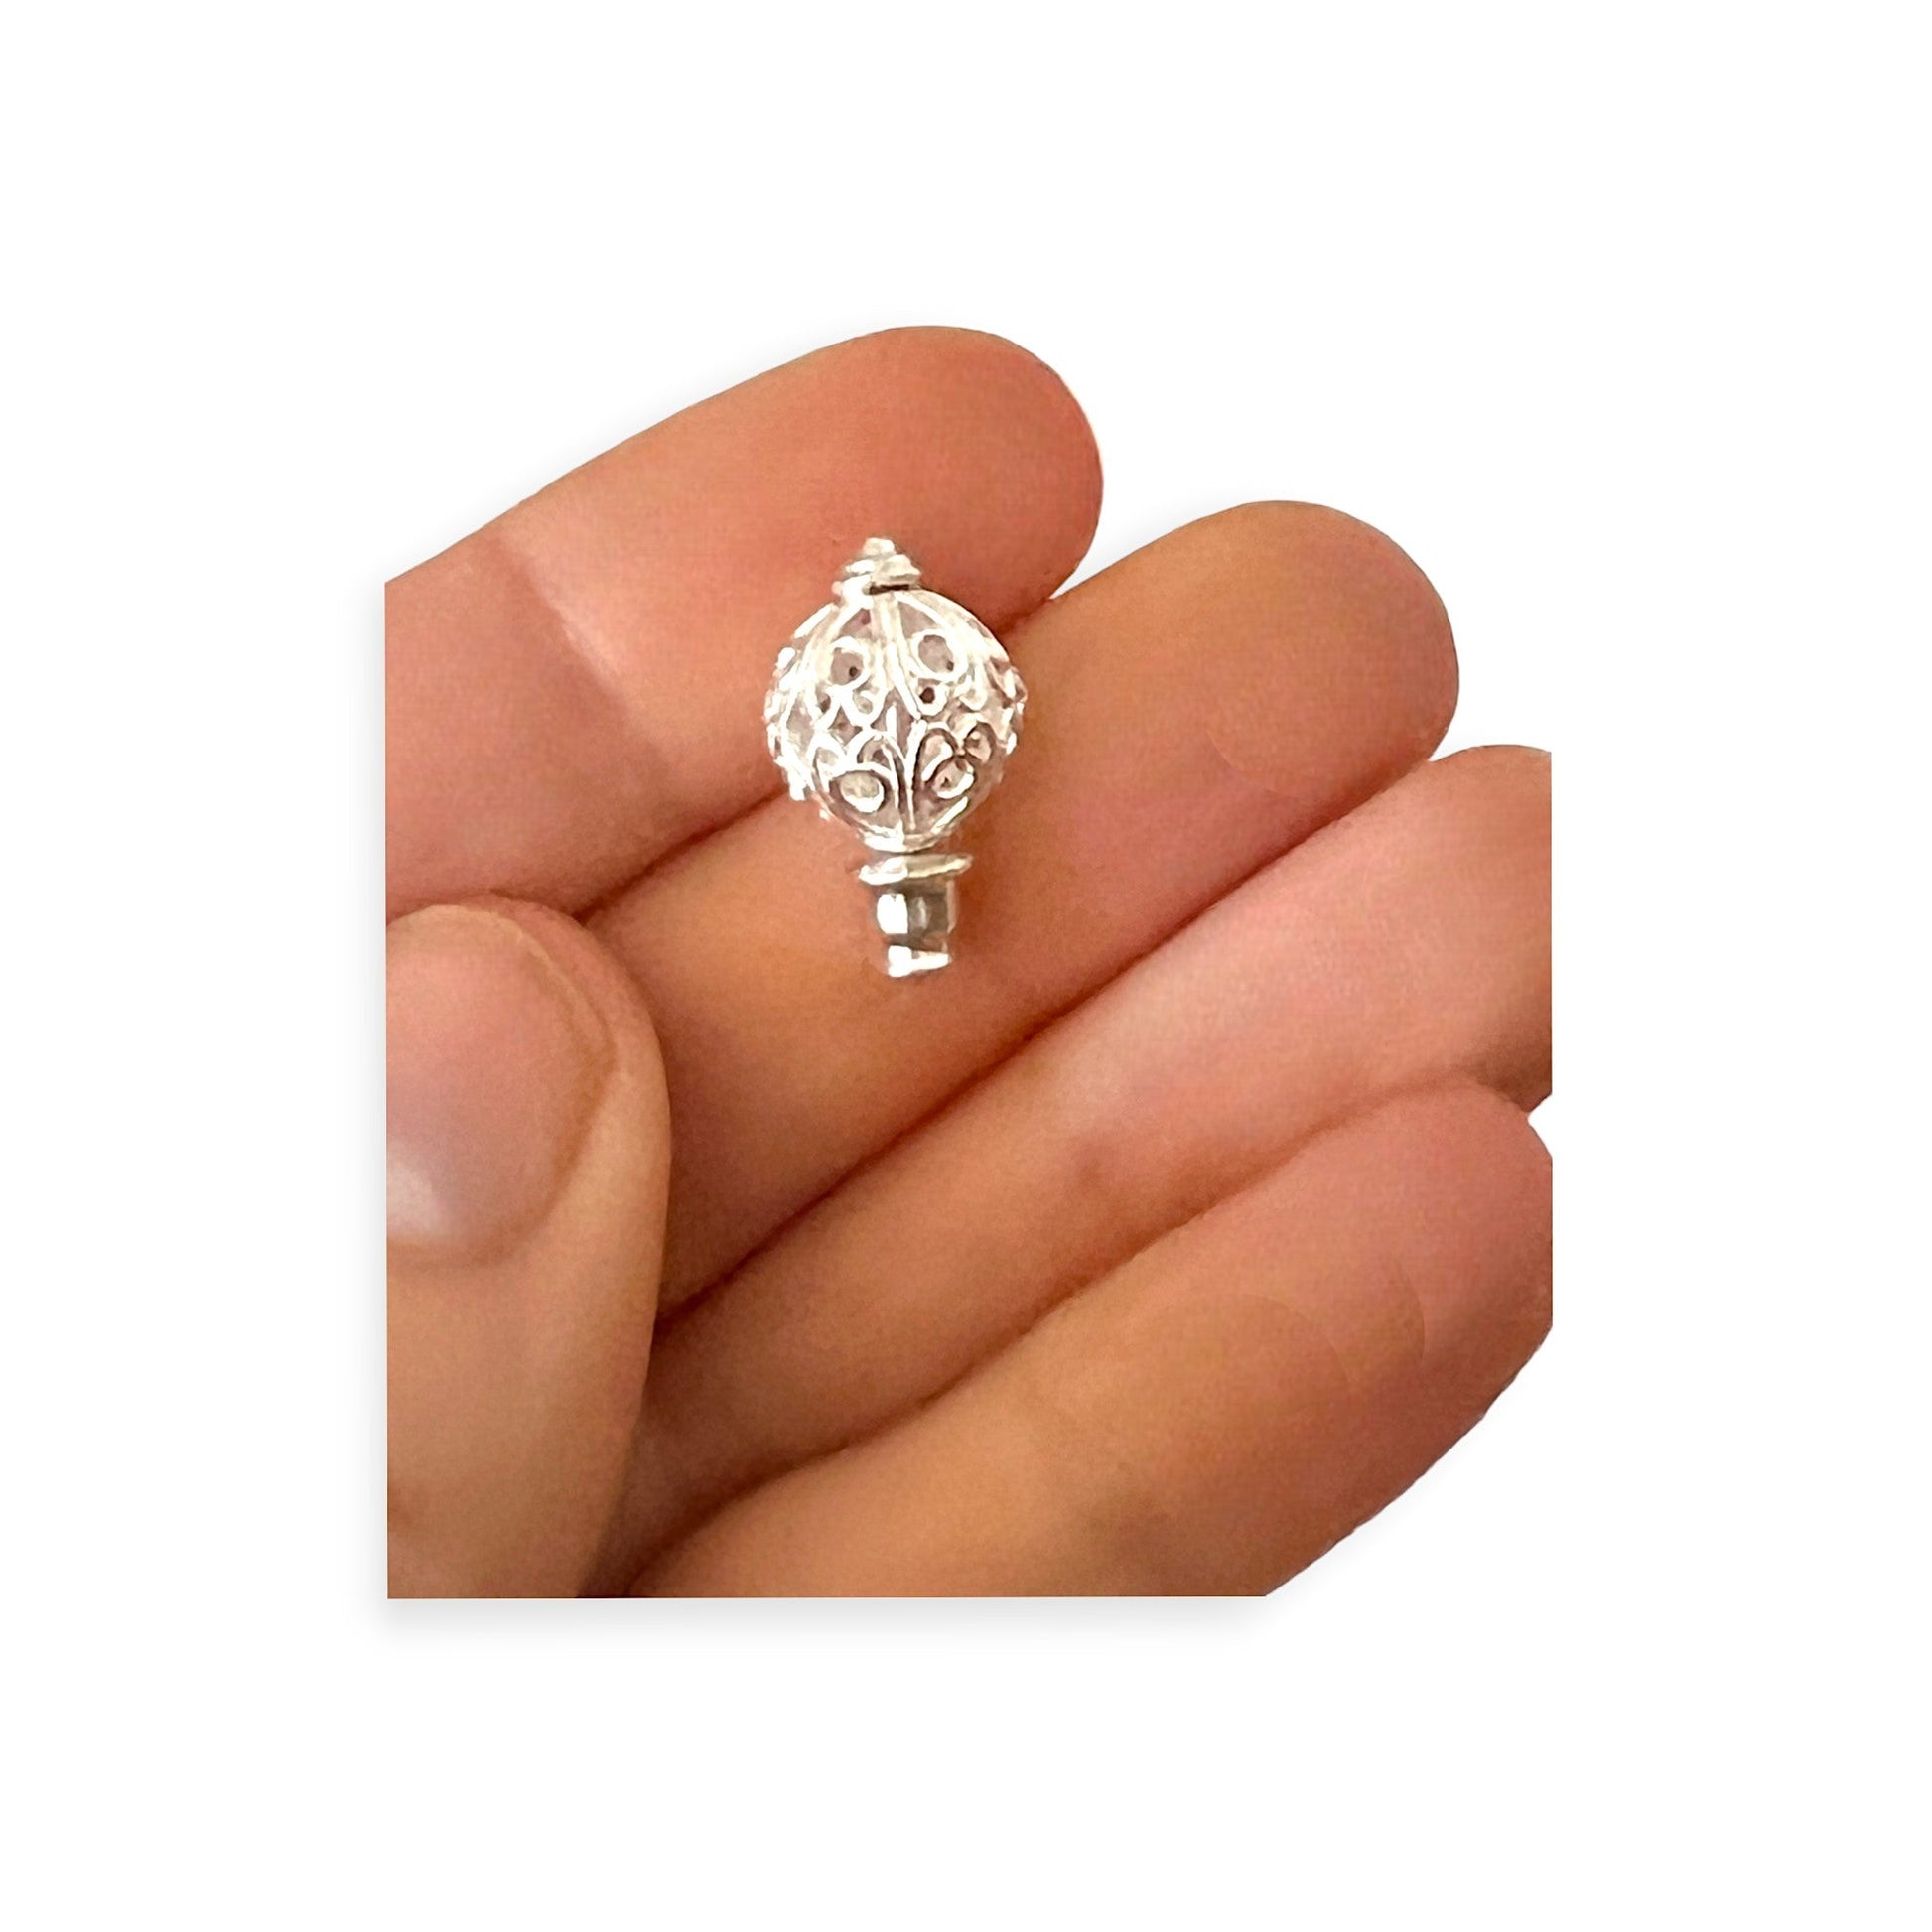 Delicate silver filigree stud earrings - Sundara Joon